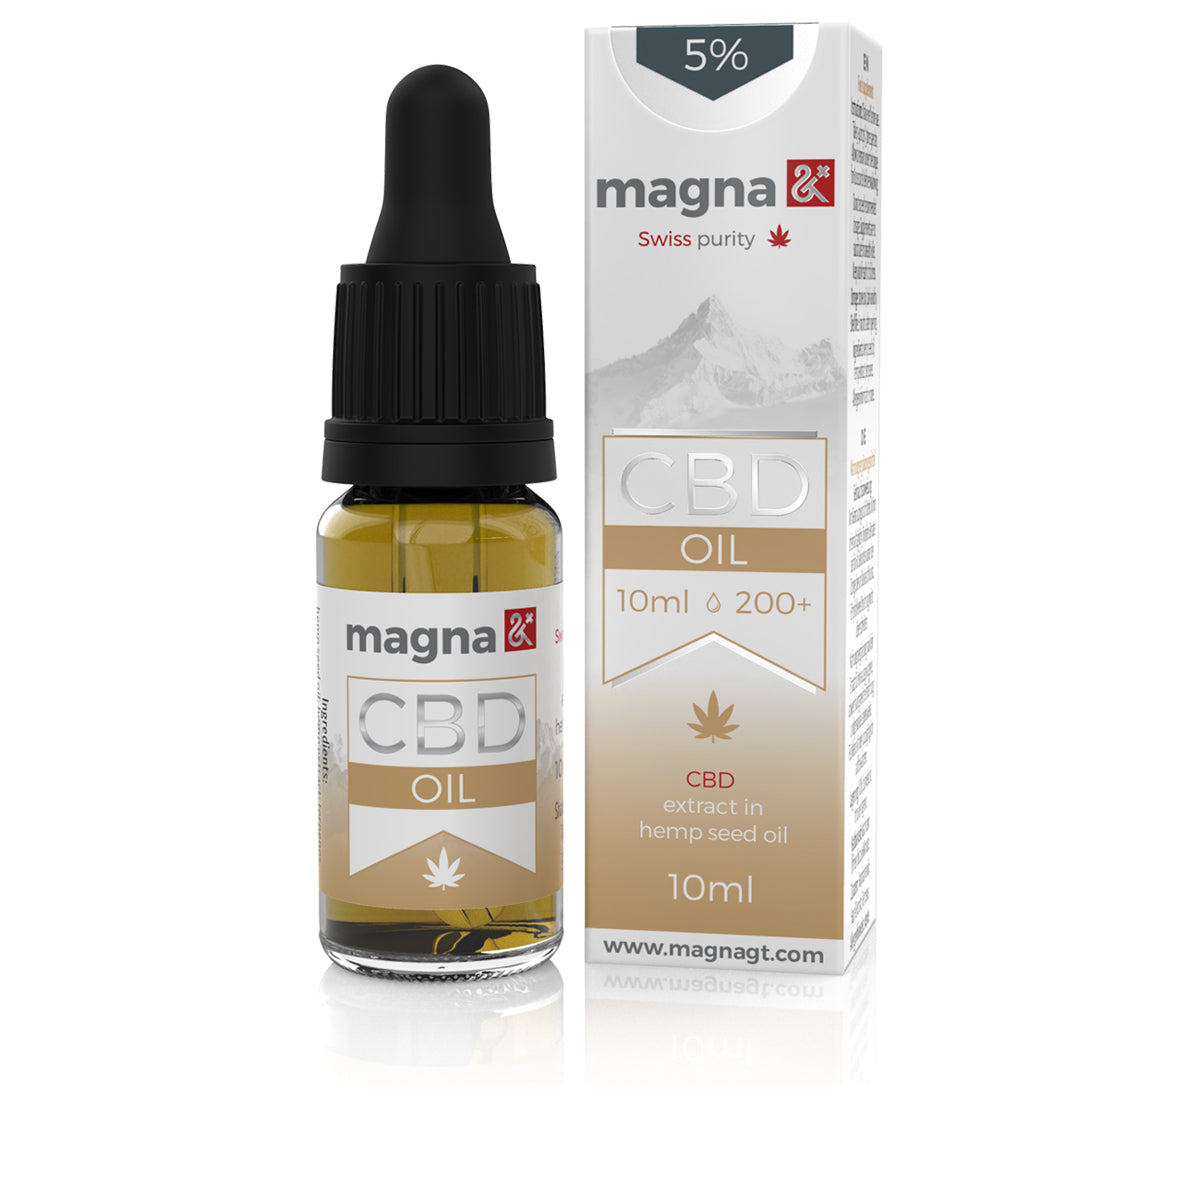 Magna G&amp;T 5% CBD Oil 500mg | 10ml | In hemp seed oil